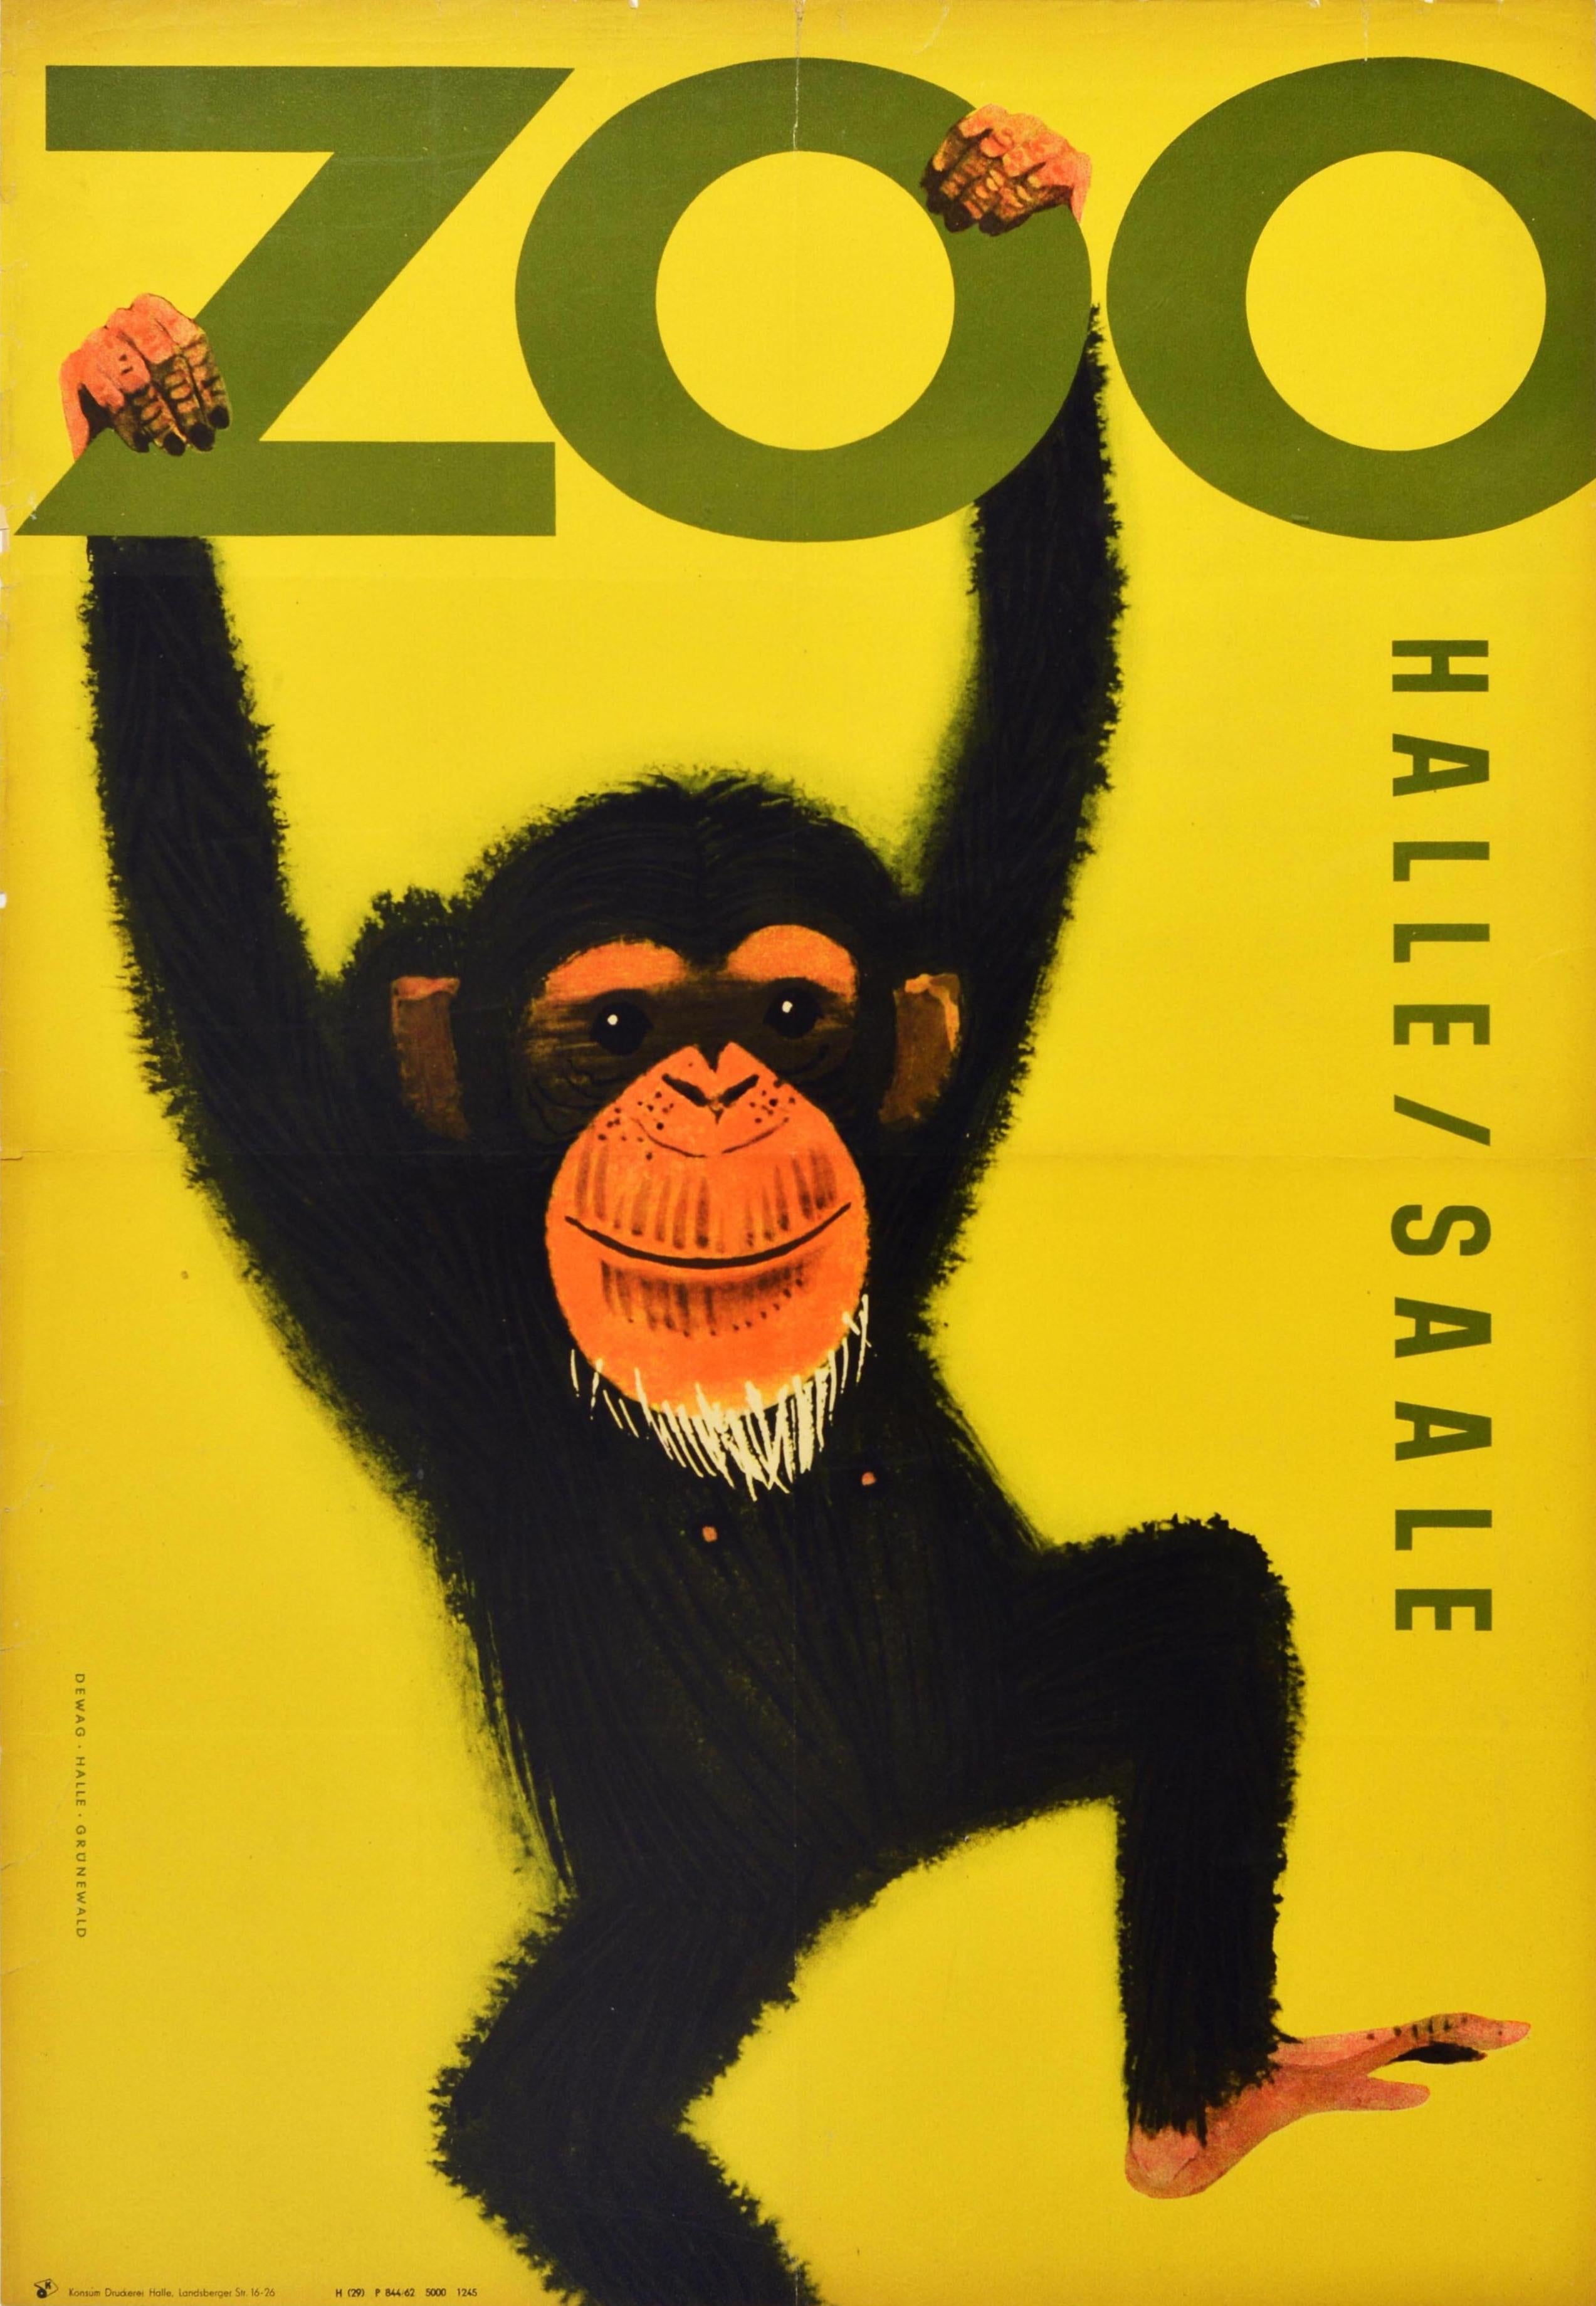 Unknown Print - Original Vintage Poster Halle Saale Zoo Germany Chimpanzee Monkey Design Artwork